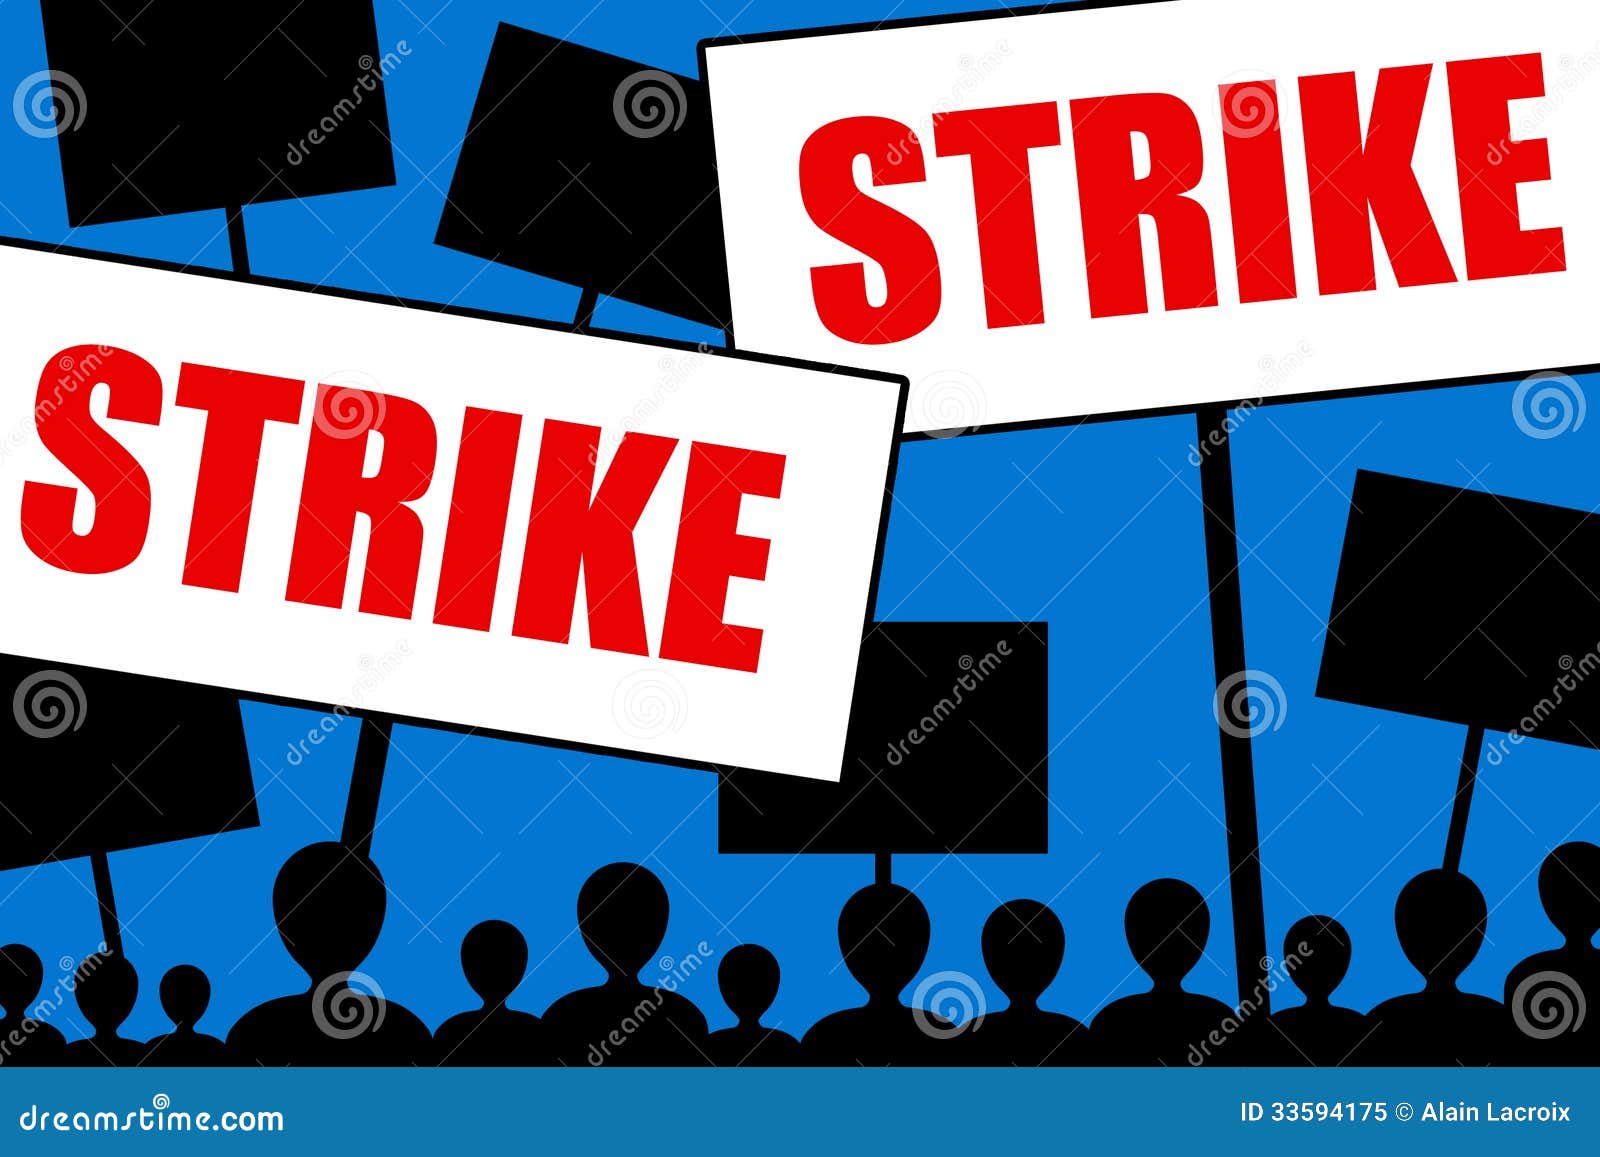 Strike stock illustration. Illustration of assertive - 33594175